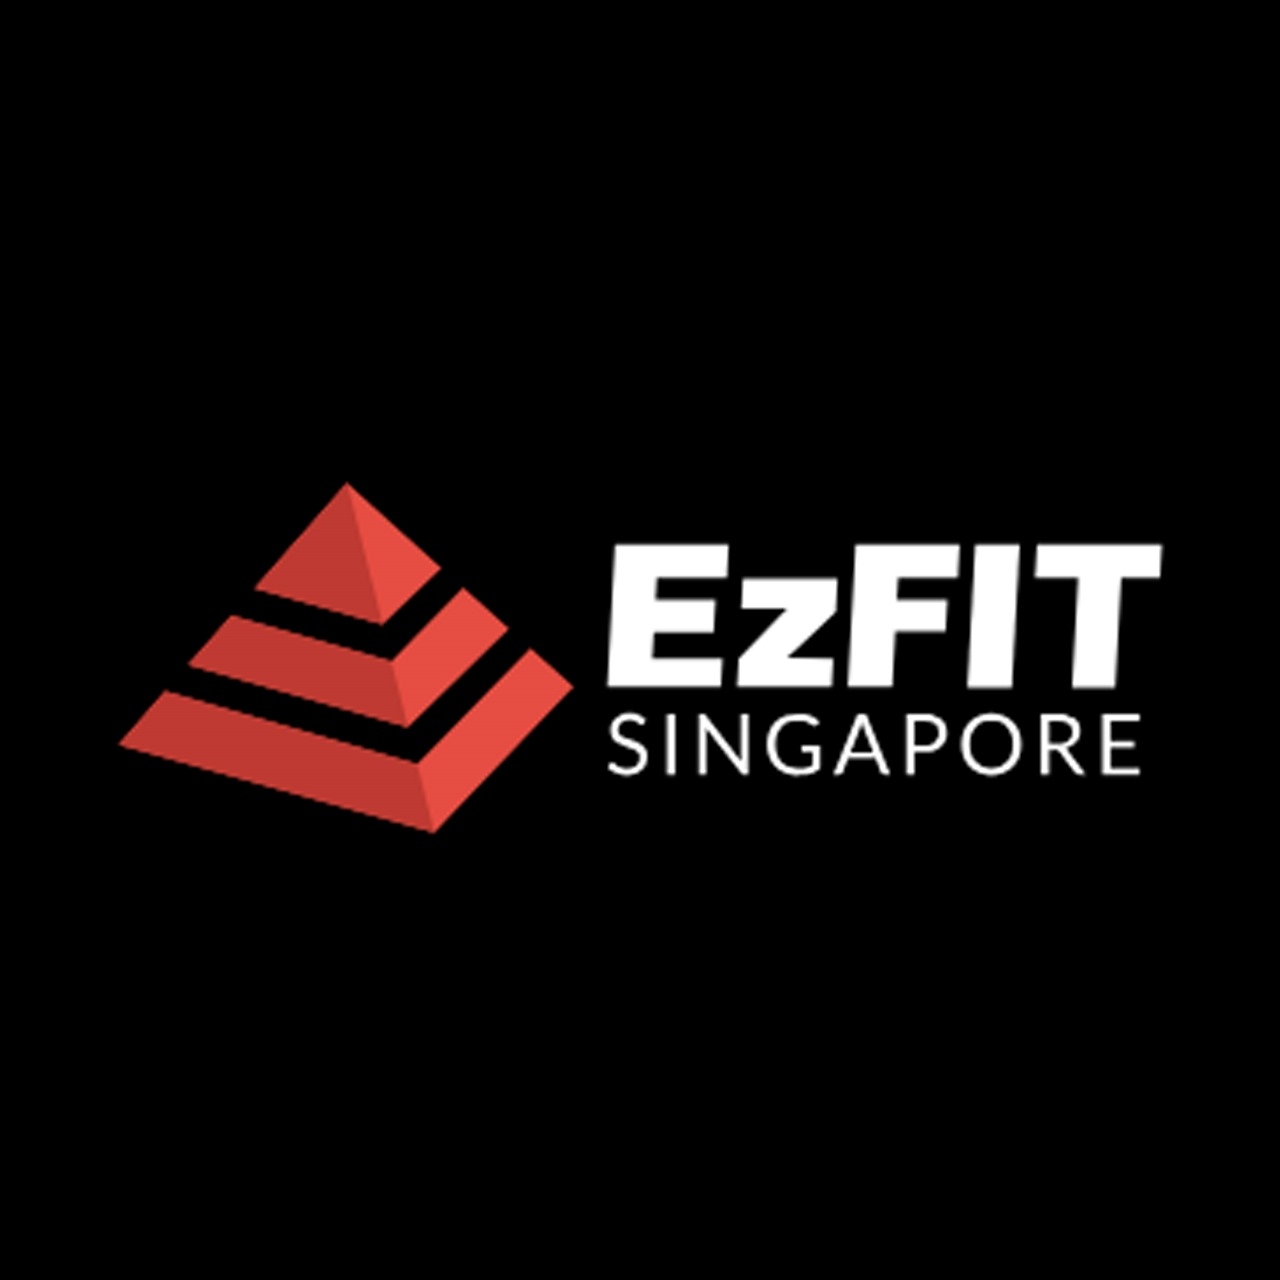 Ezfit Singapore